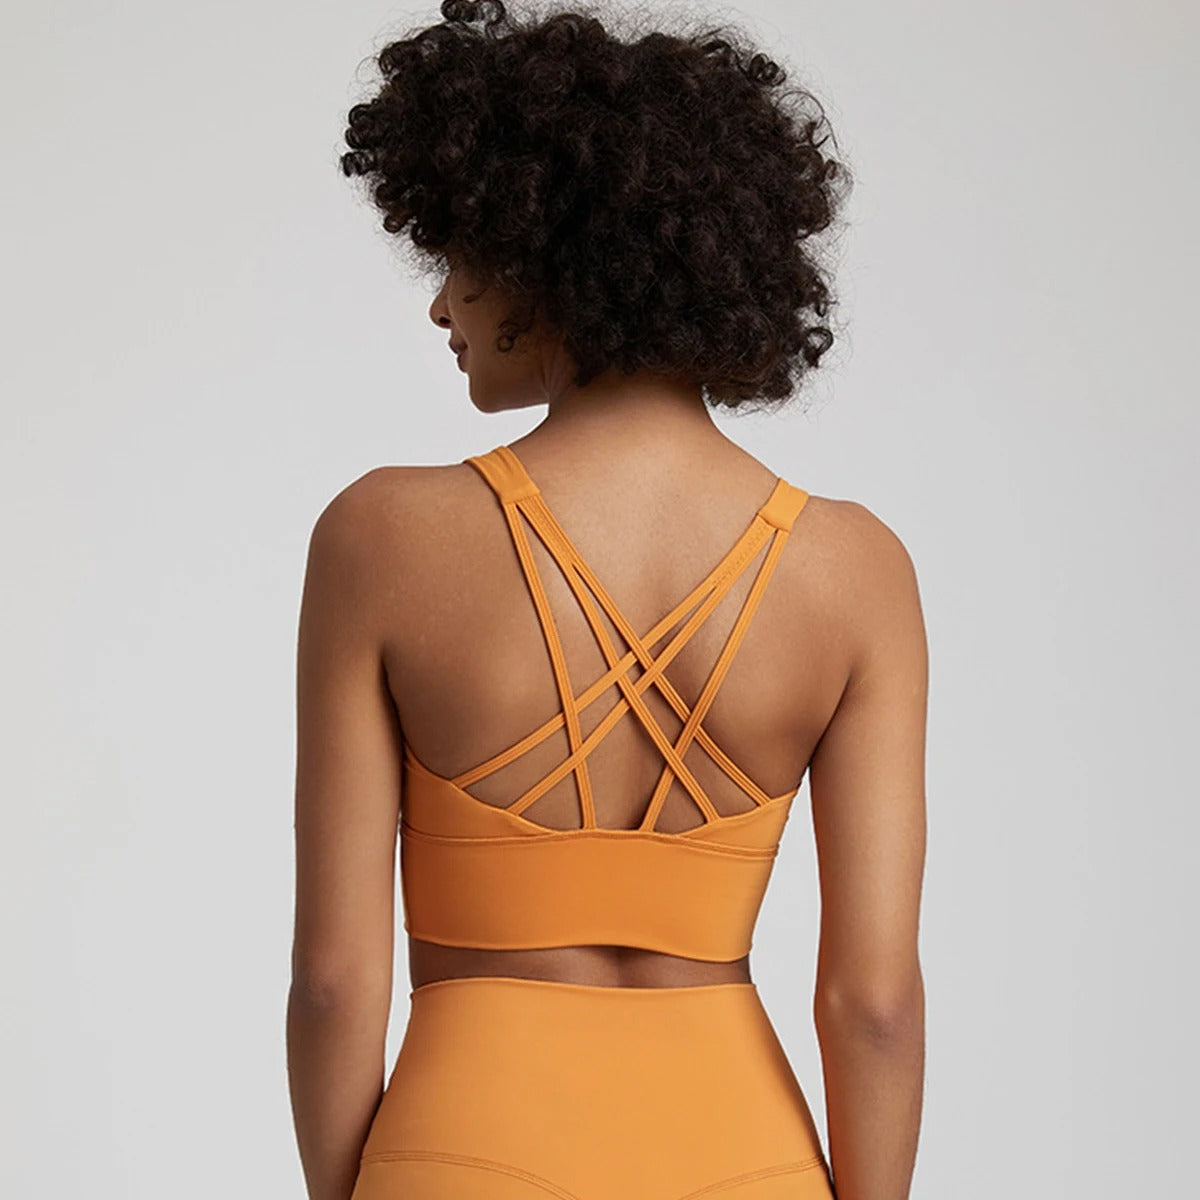 breathable high quality orange sports bra and leggings set